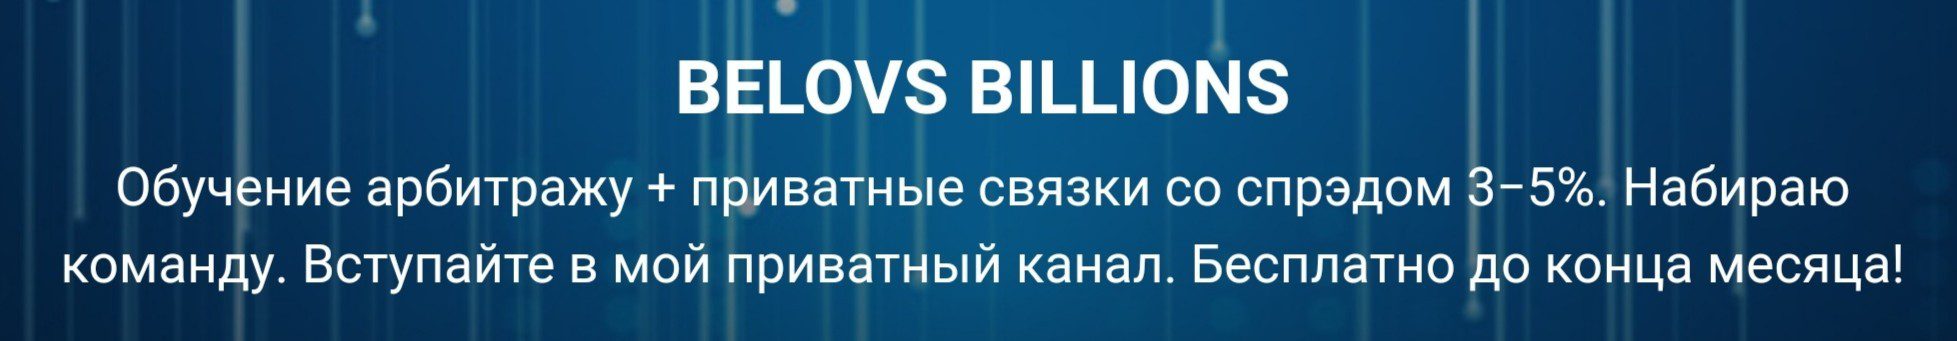 Belovs Billionsи обзор проекта